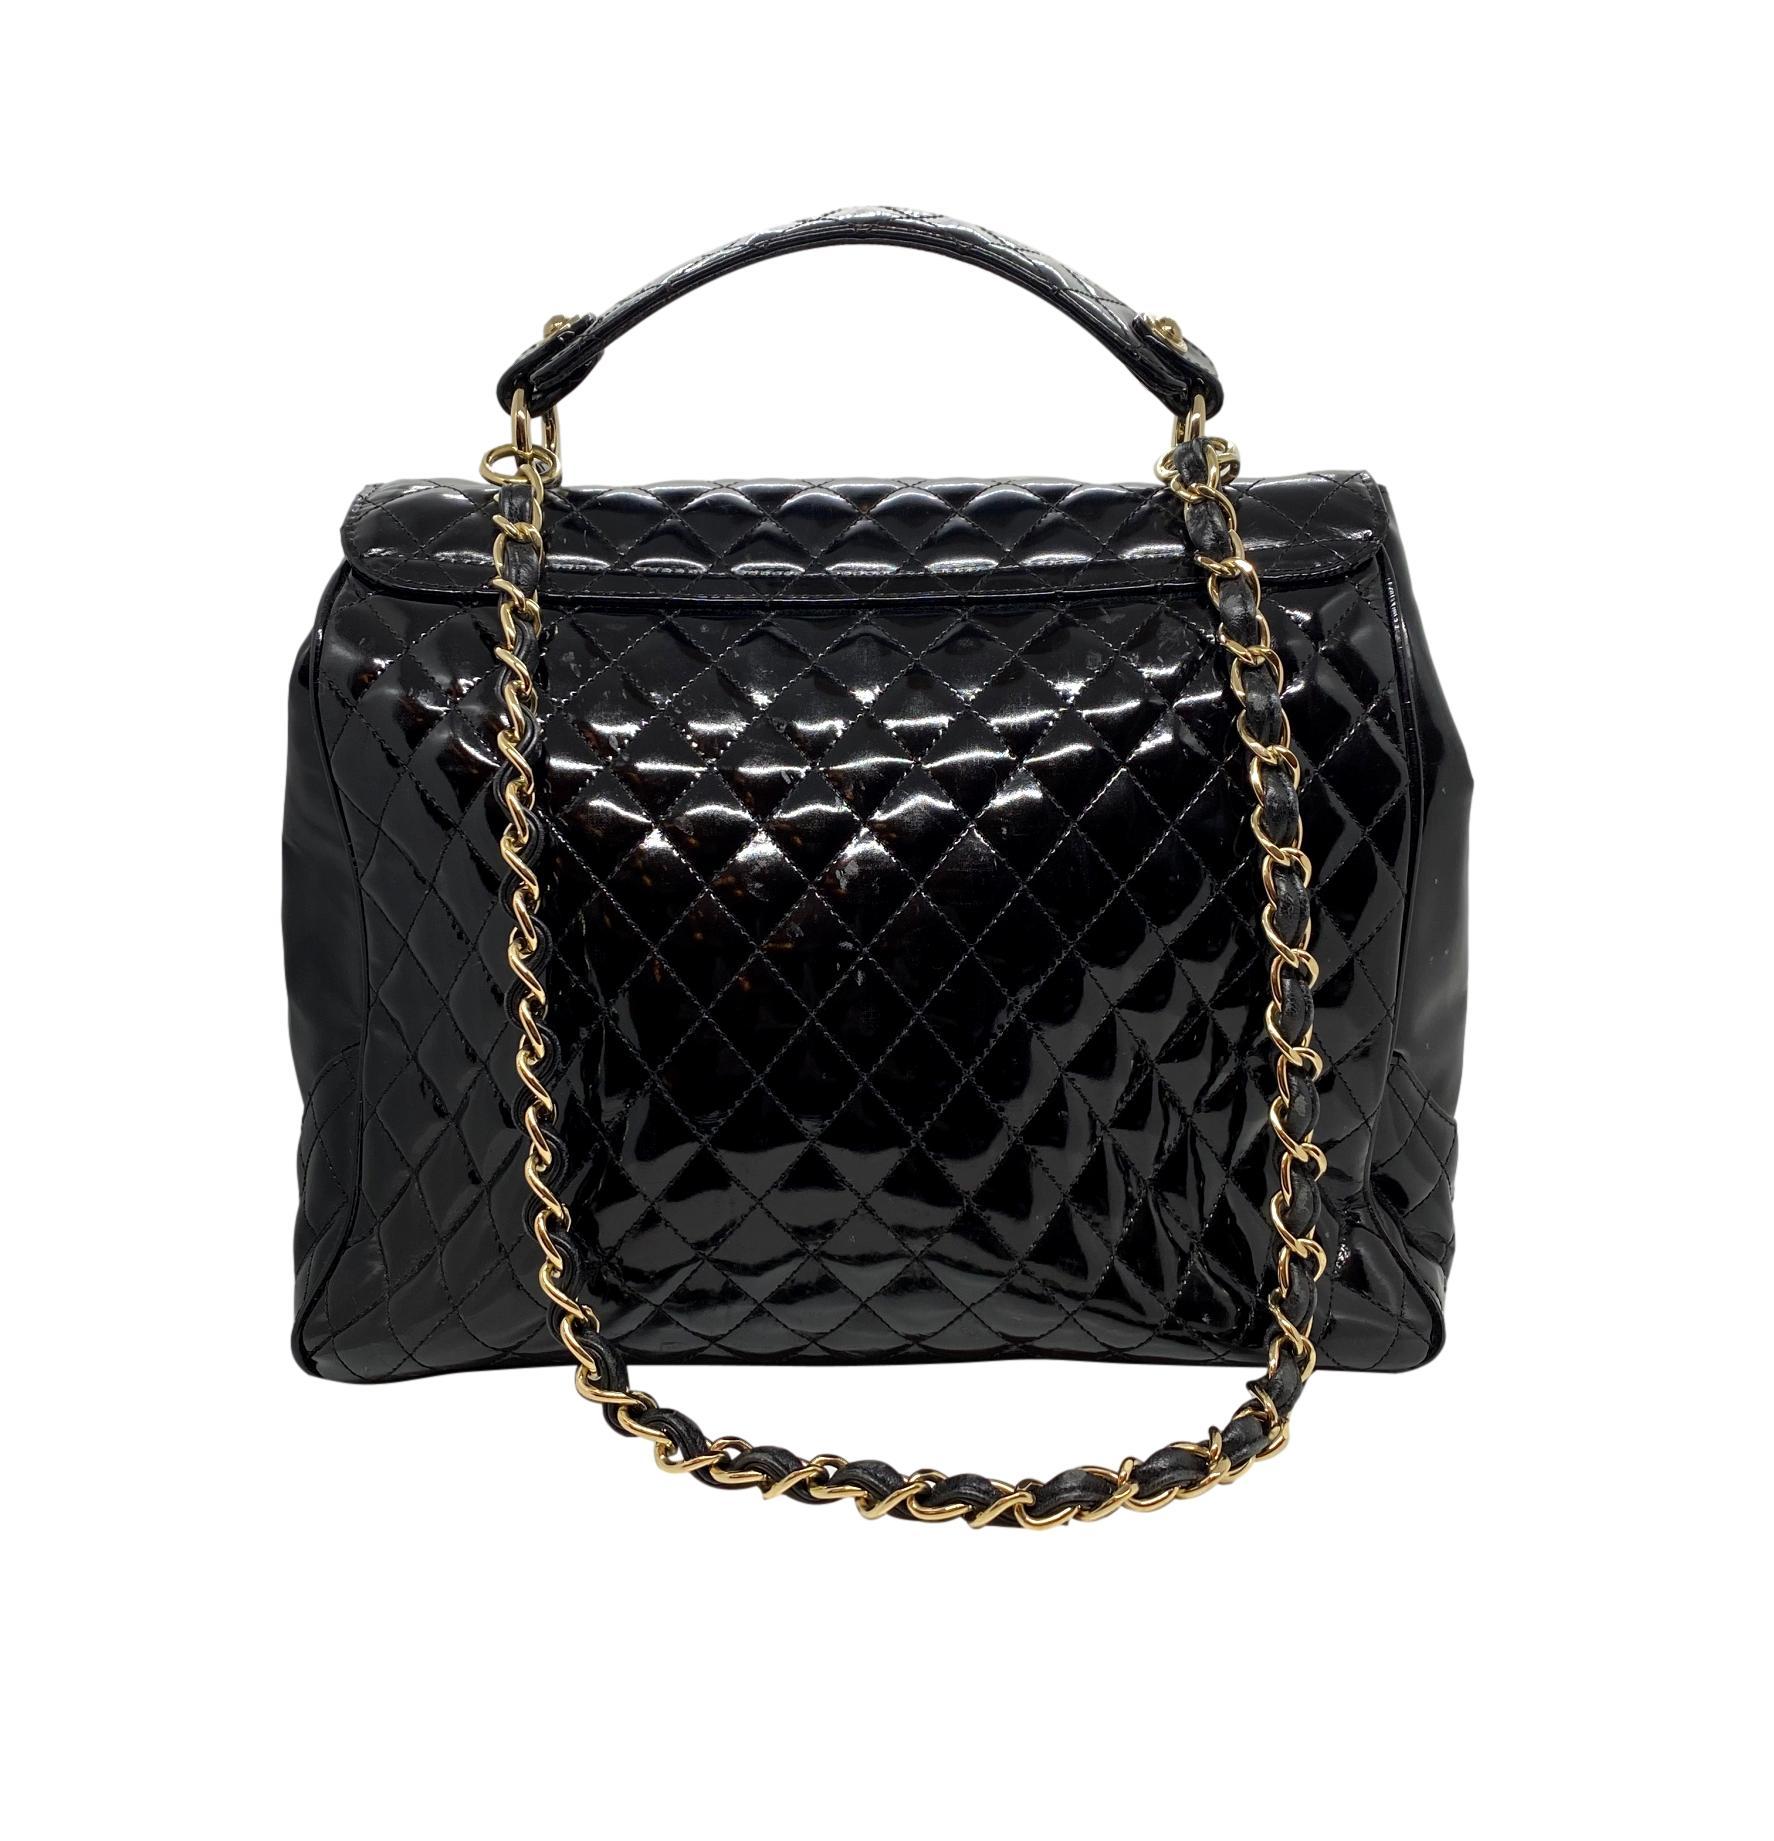 Black Chanel Glazed Lambskin Quilted Mademoiselle Kelly Top Handle Shoulder Bag, 2009.